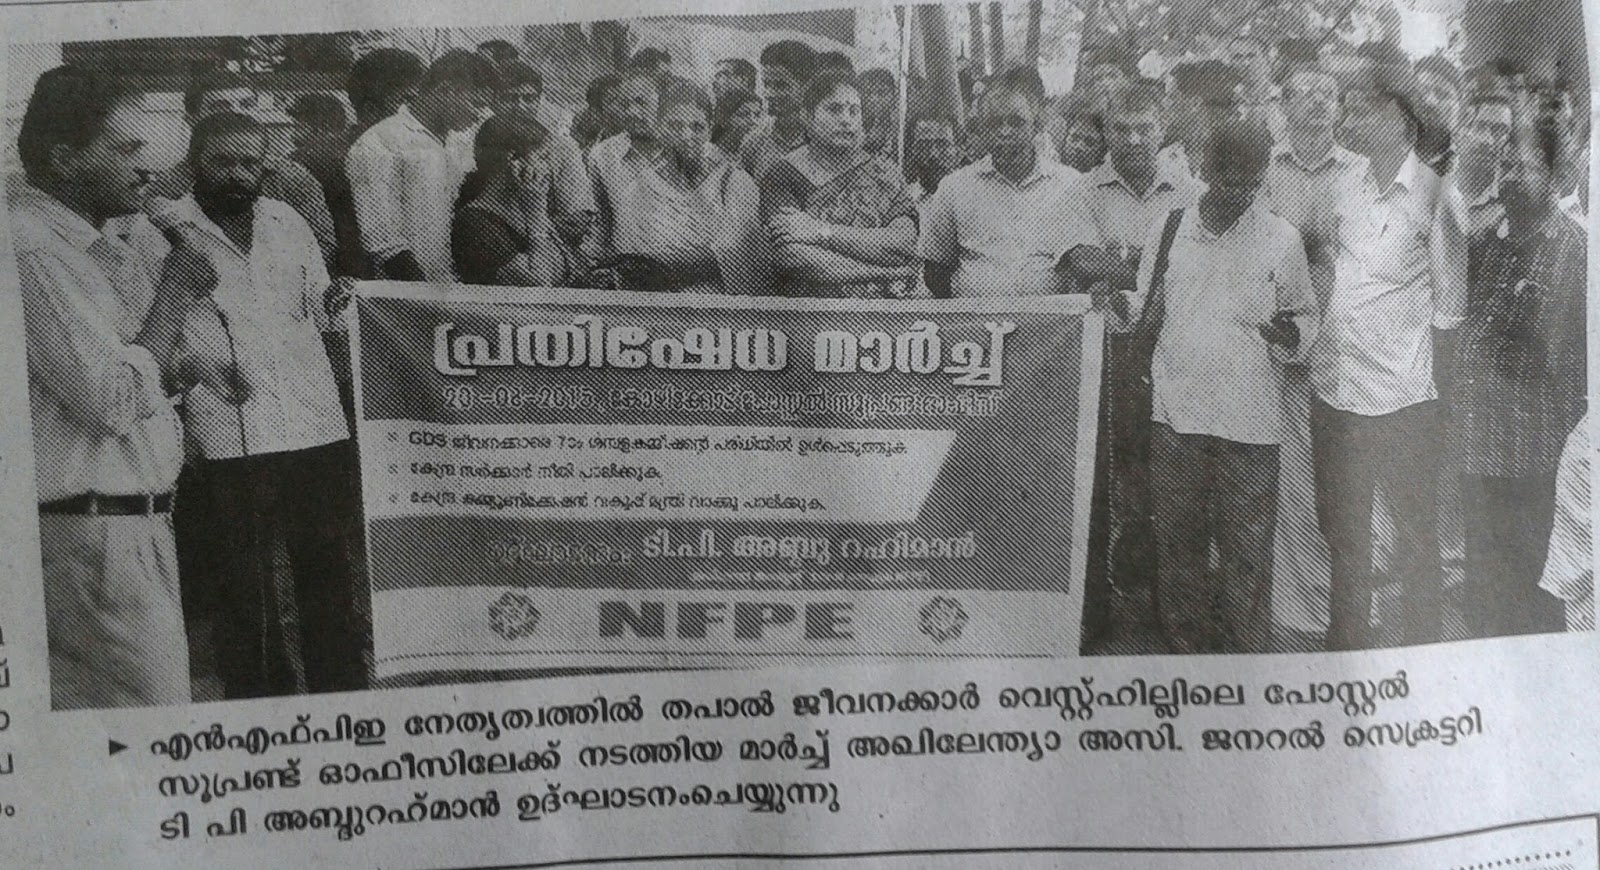 National Federation Of Postal Employees Ottapalam Division Ottapalam 679101 Kerala Protest